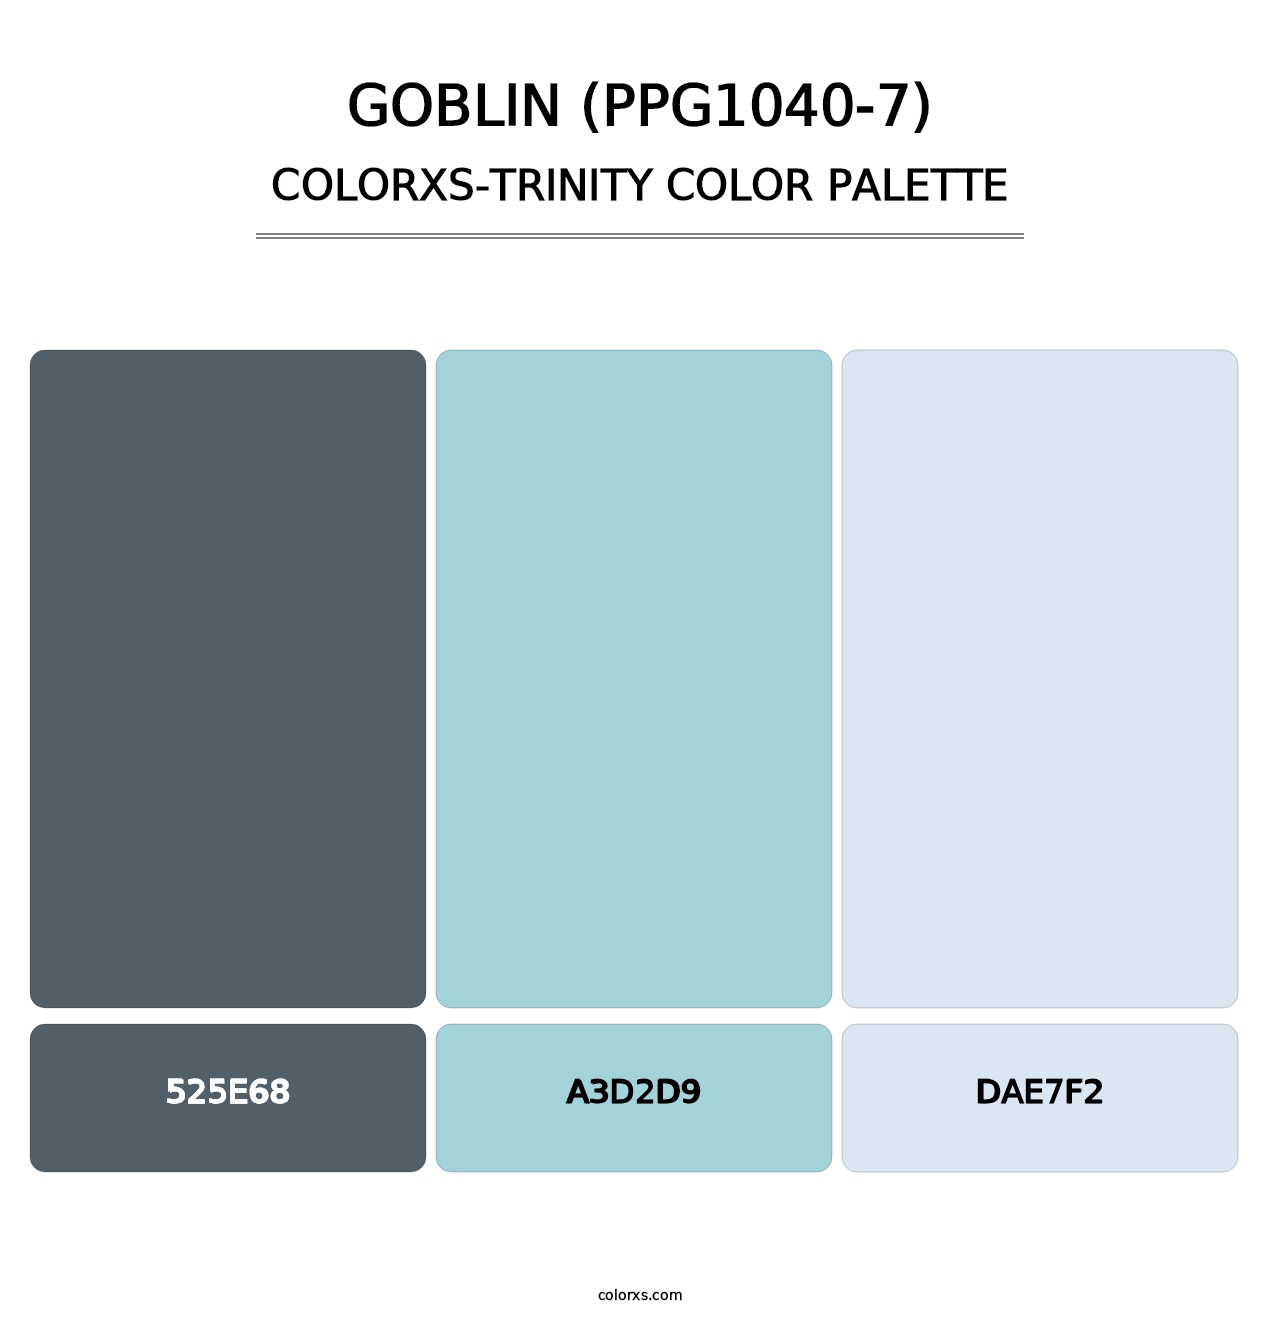 Goblin (PPG1040-7) - Colorxs Trinity Palette